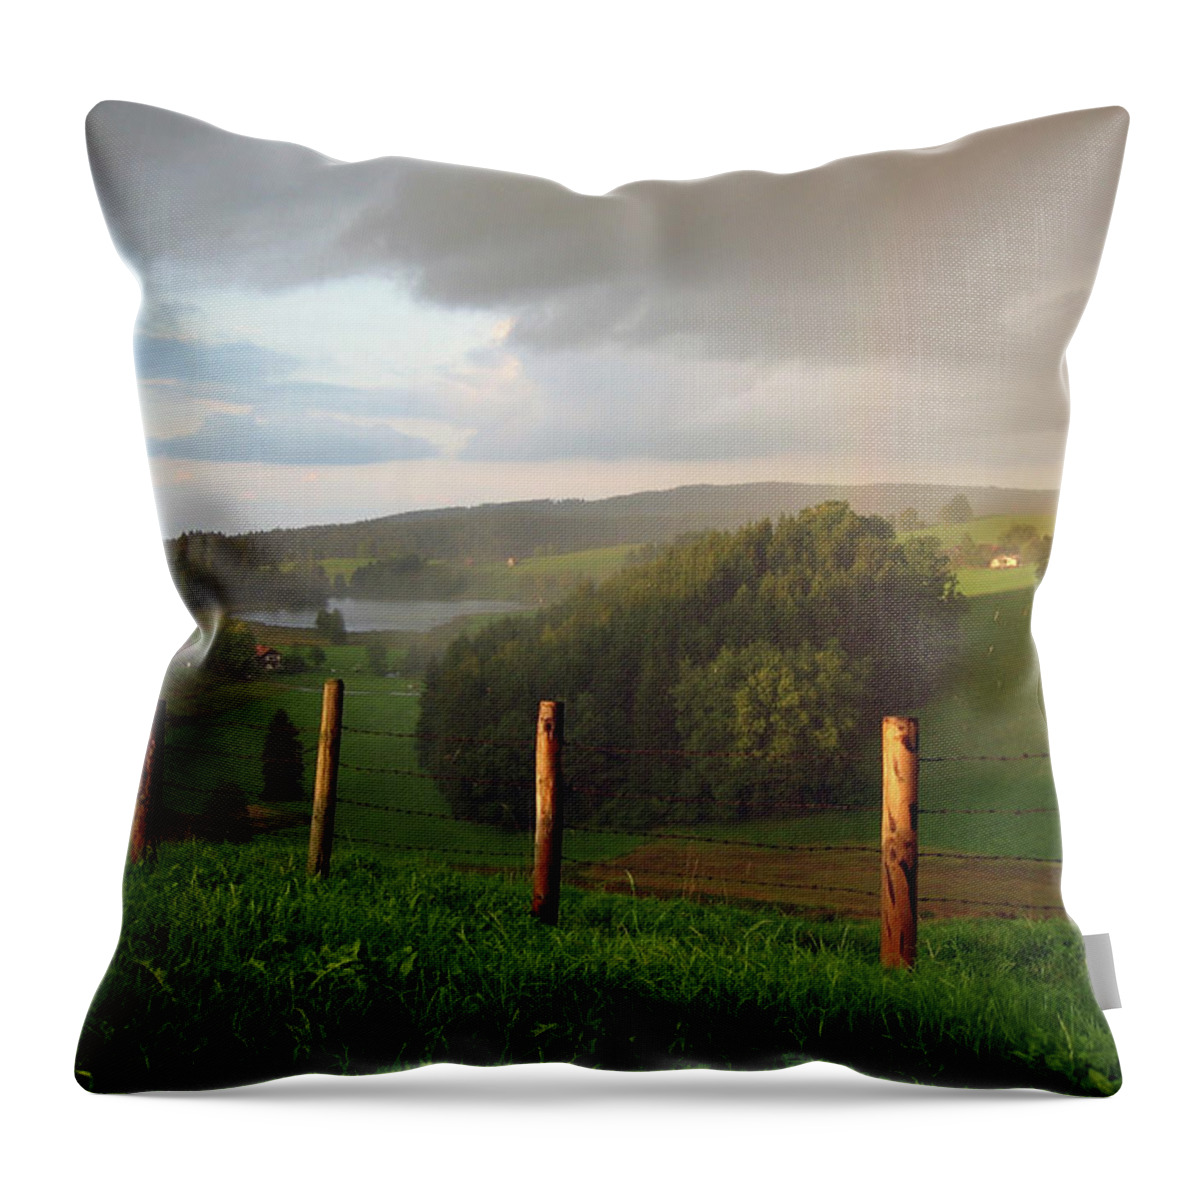 Scenics Throw Pillow featuring the photograph Allgaeu Rainbow by Wingmar